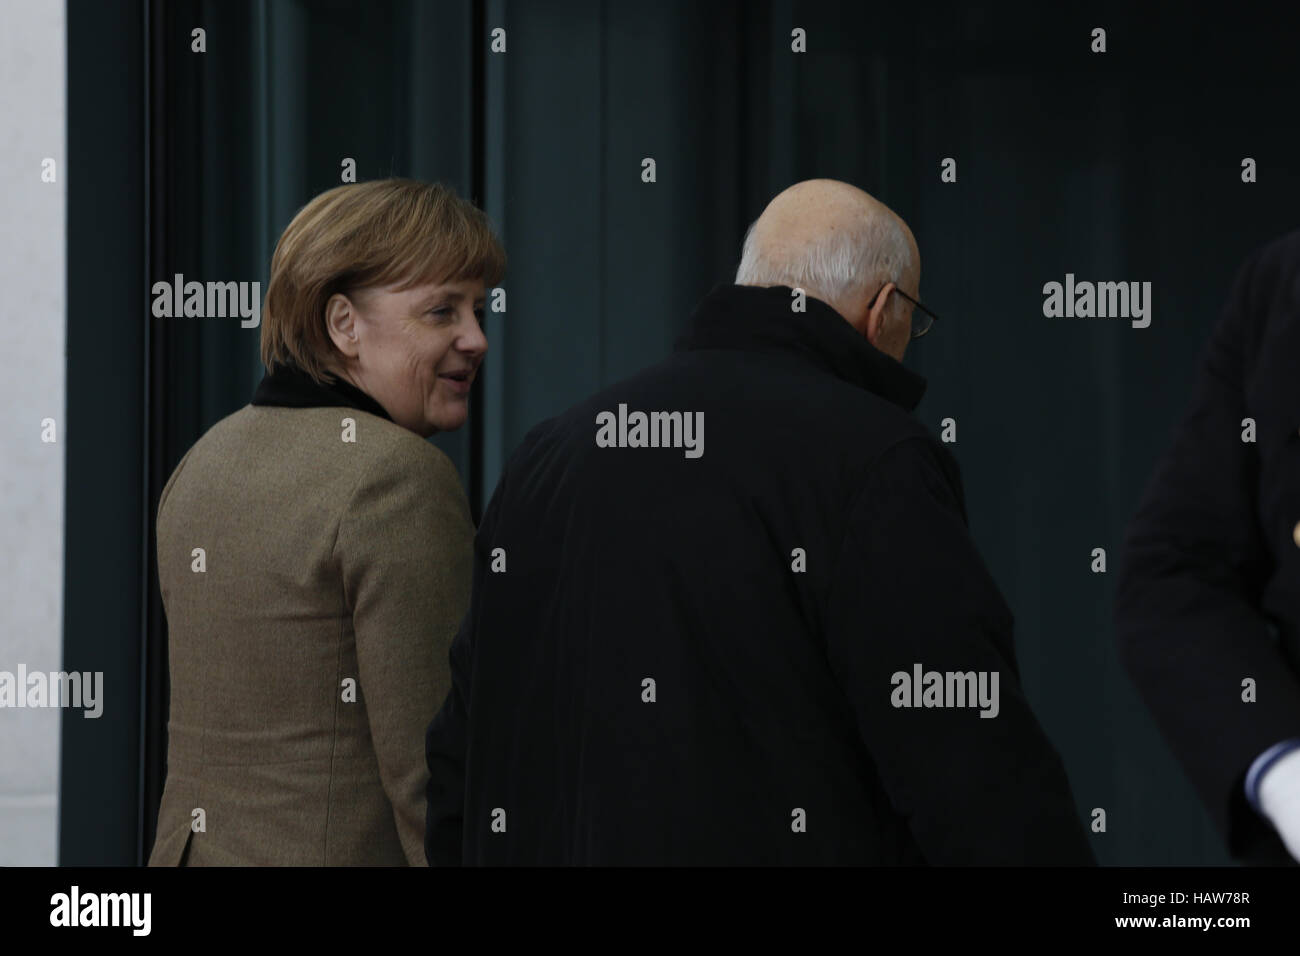 Merkel welcomes Italiens Präsident Napolitano Stock Photo